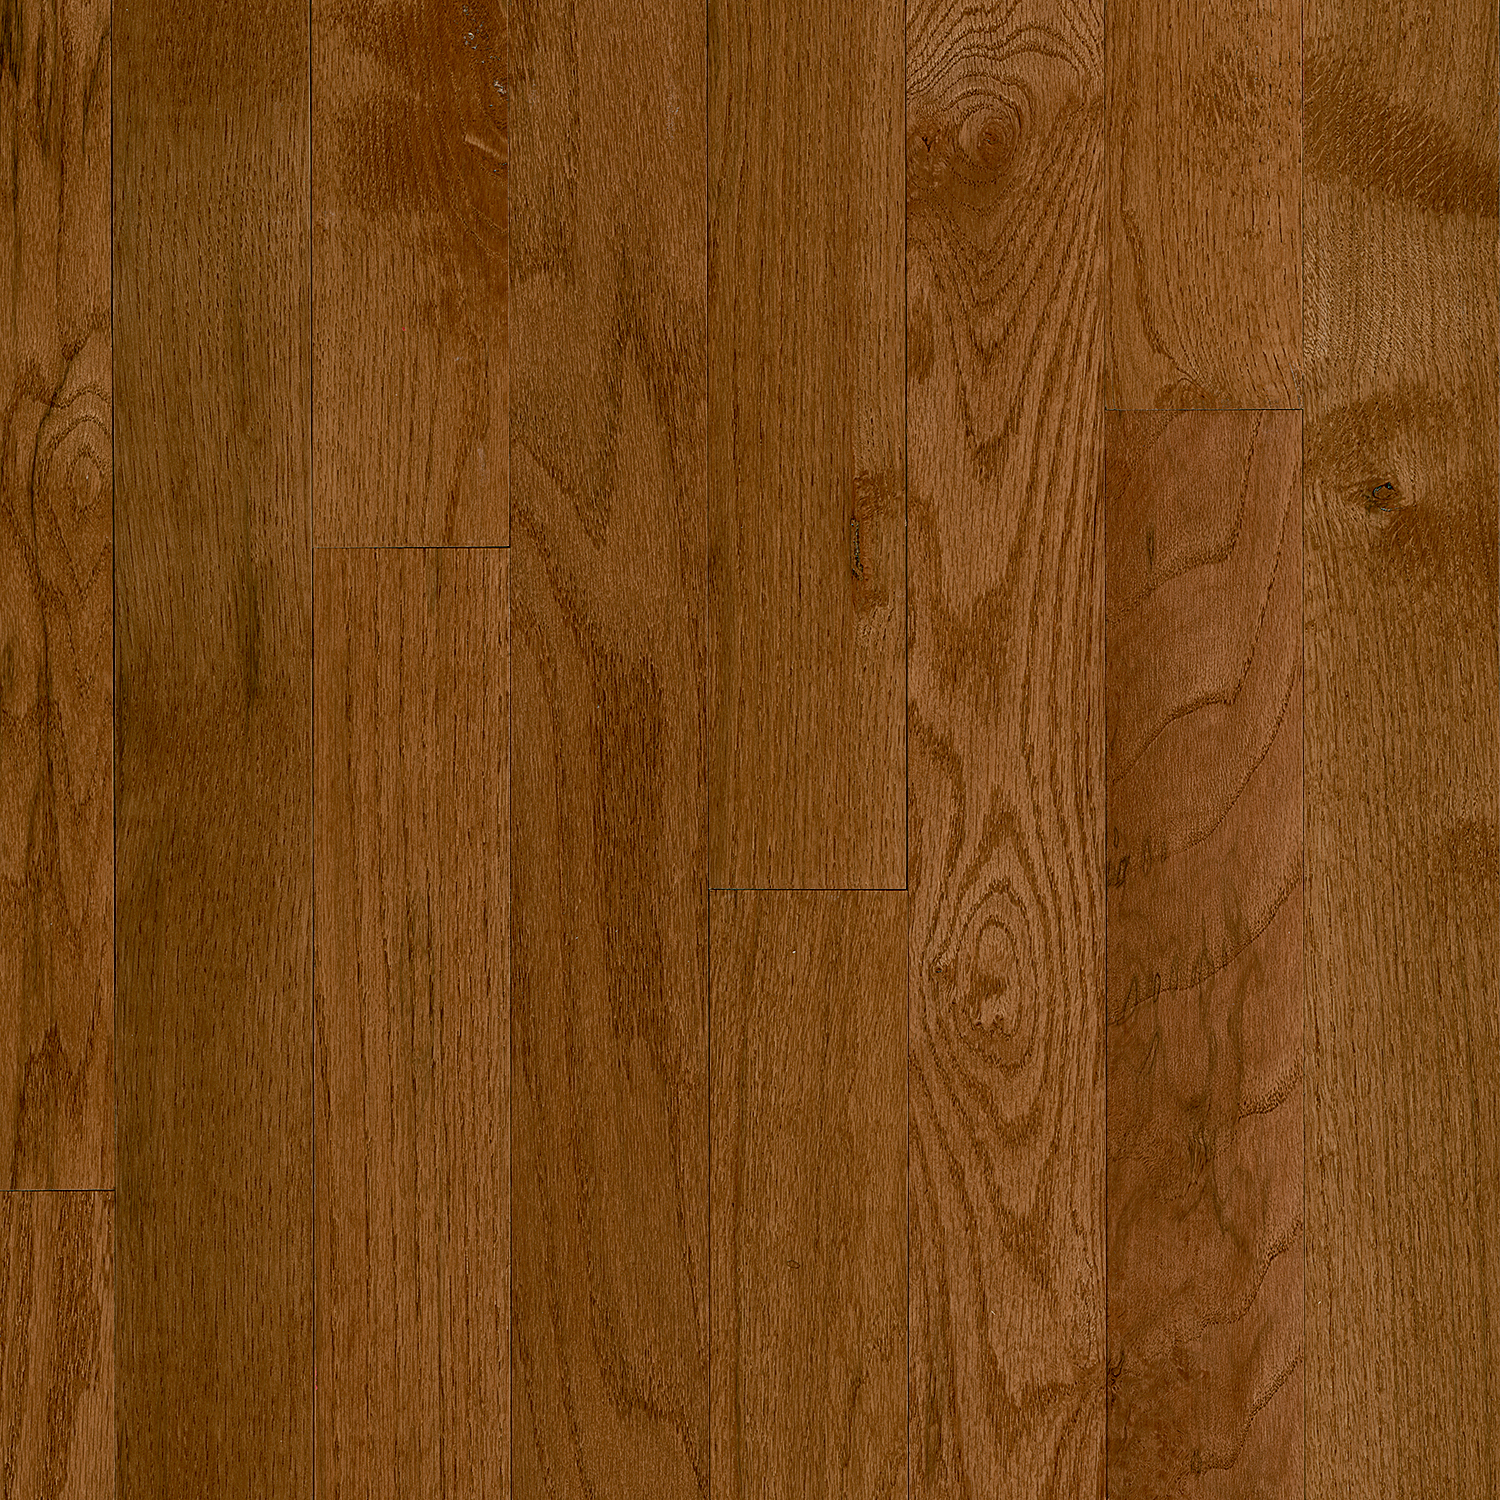 Oak Solid Hardwood Cb9321, Wickham Hardwood Flooring Retailers